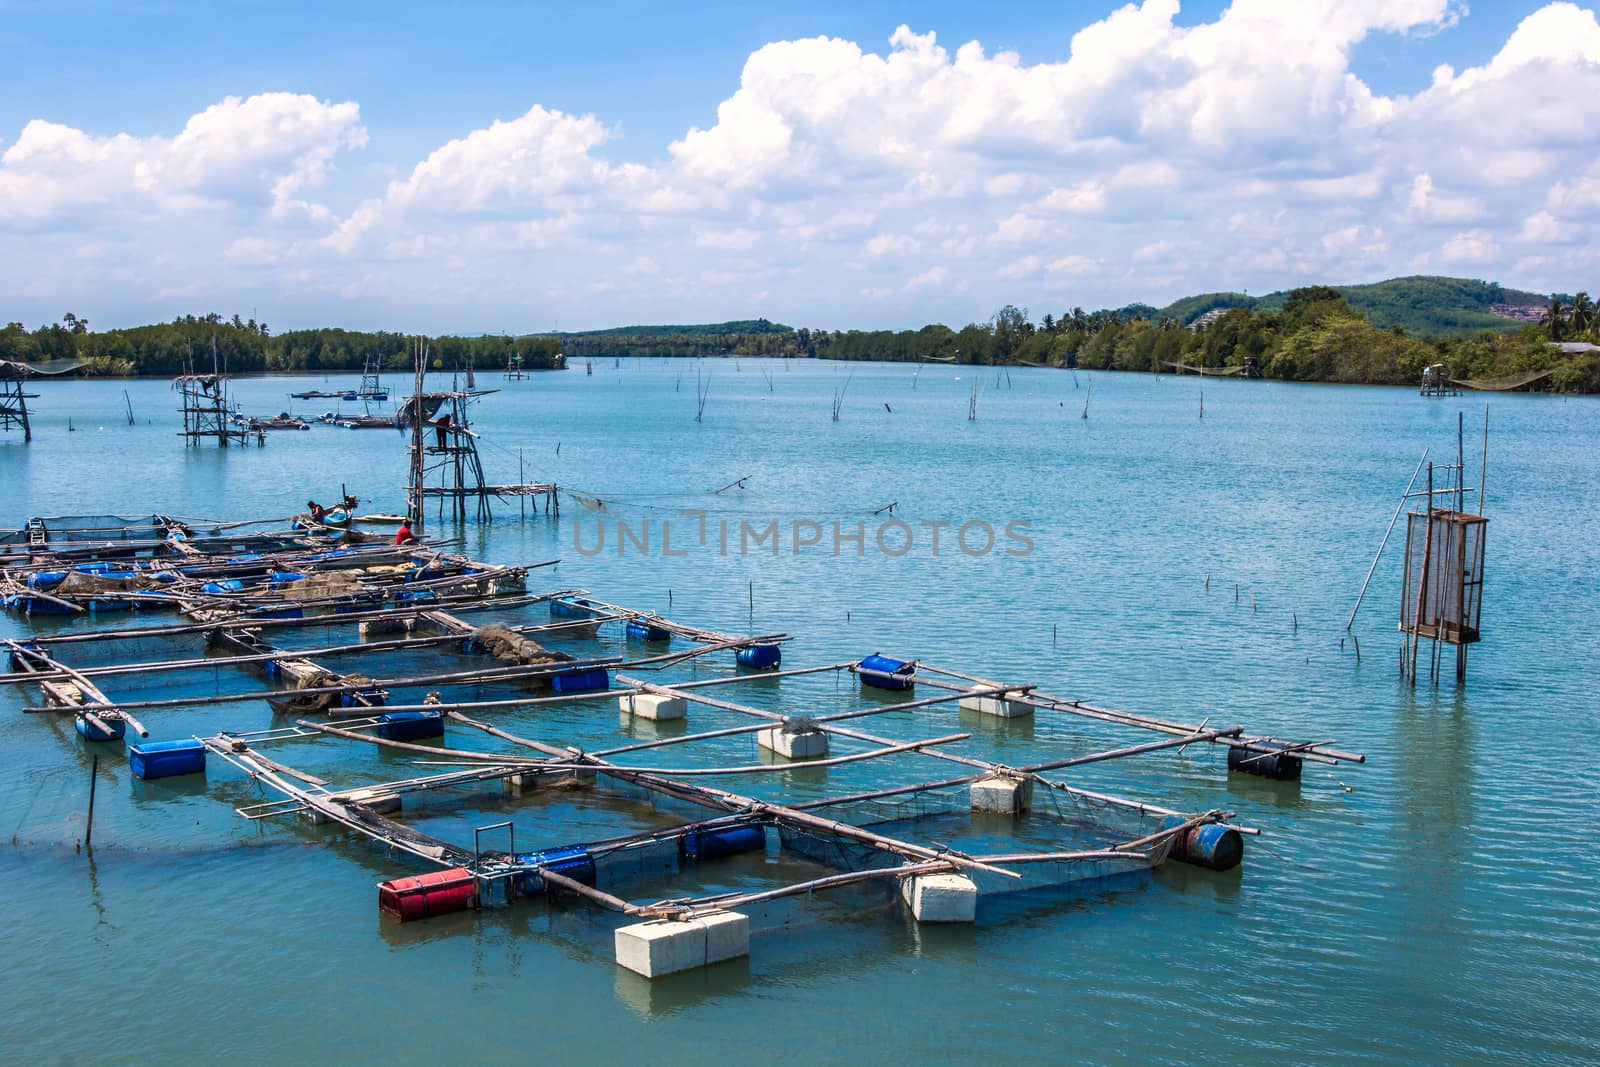 Cage aquaculture farming, Thailand by kannapon